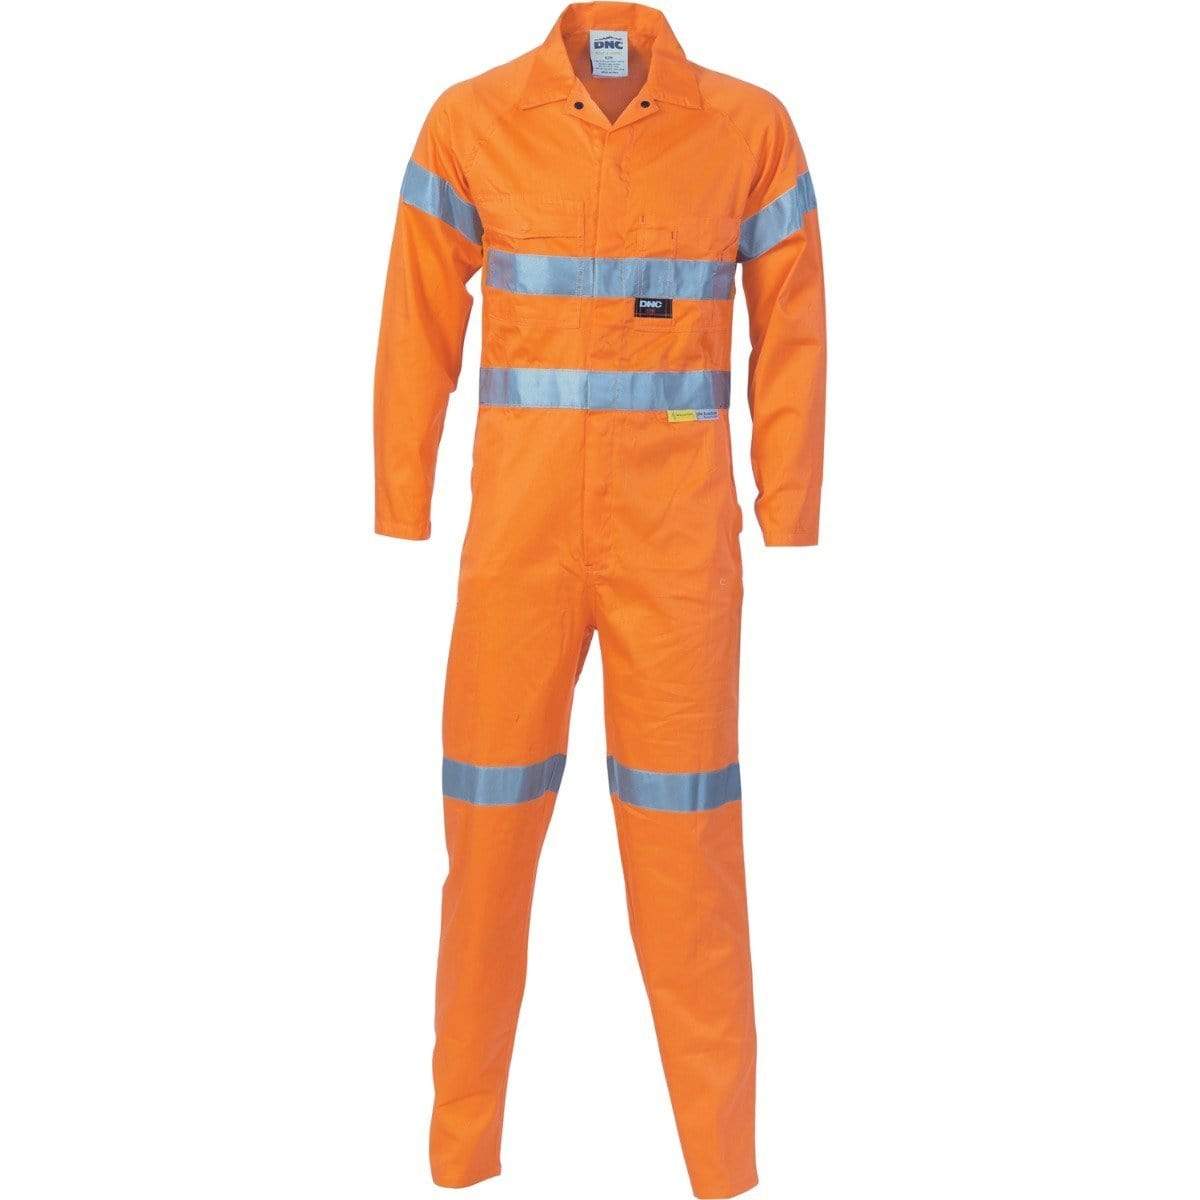 Dnc Workwear Hi-vis Cool-breeze Orange Lightweight Cotton Coverall With 3m Reflective Tape - 3956 Work Wear DNC Workwear Orange 77R 